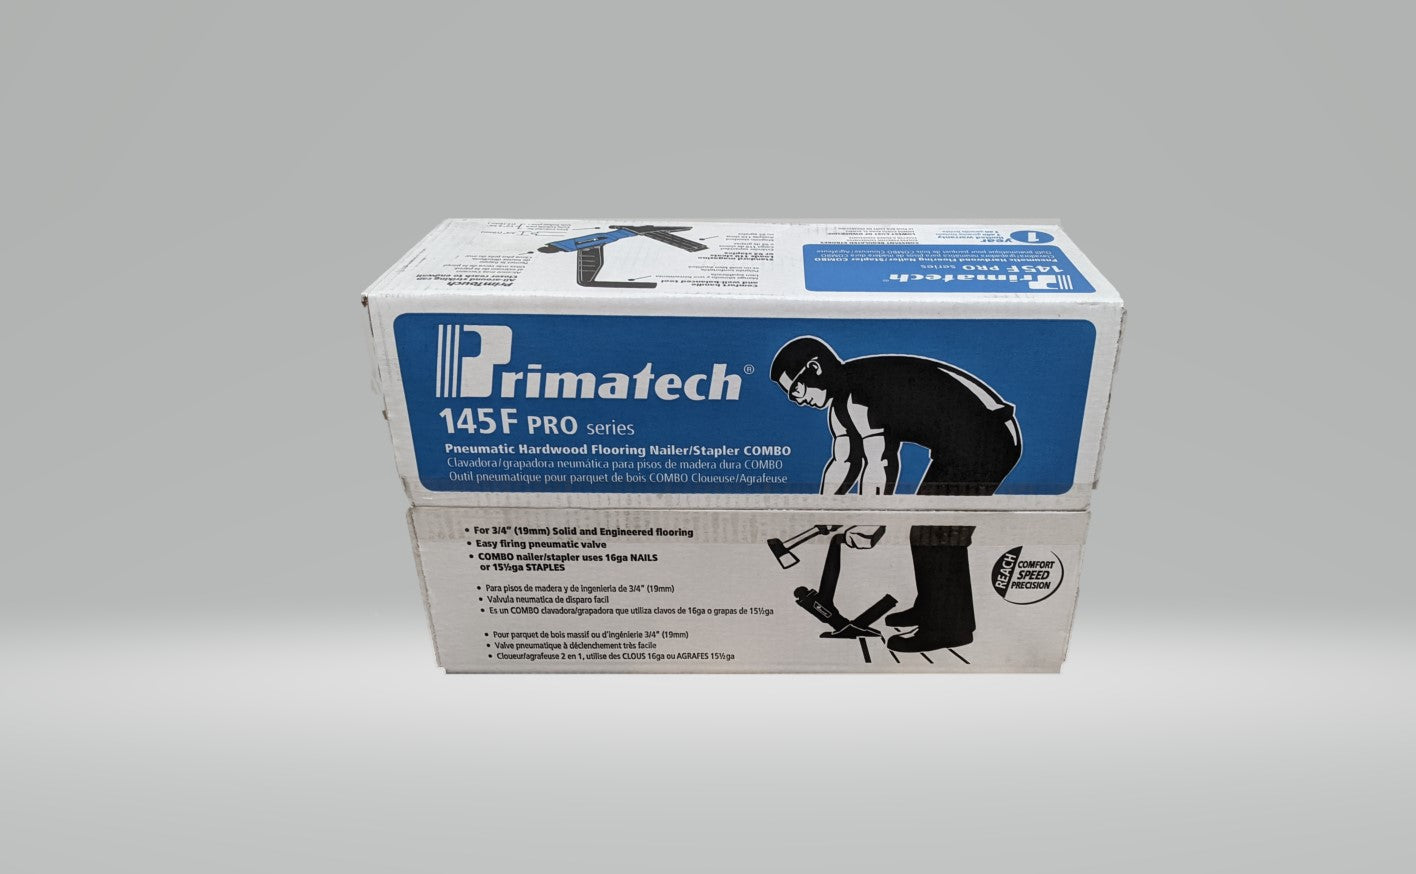 Primatech 145F Pro Series Hardwood Flooring Nailer